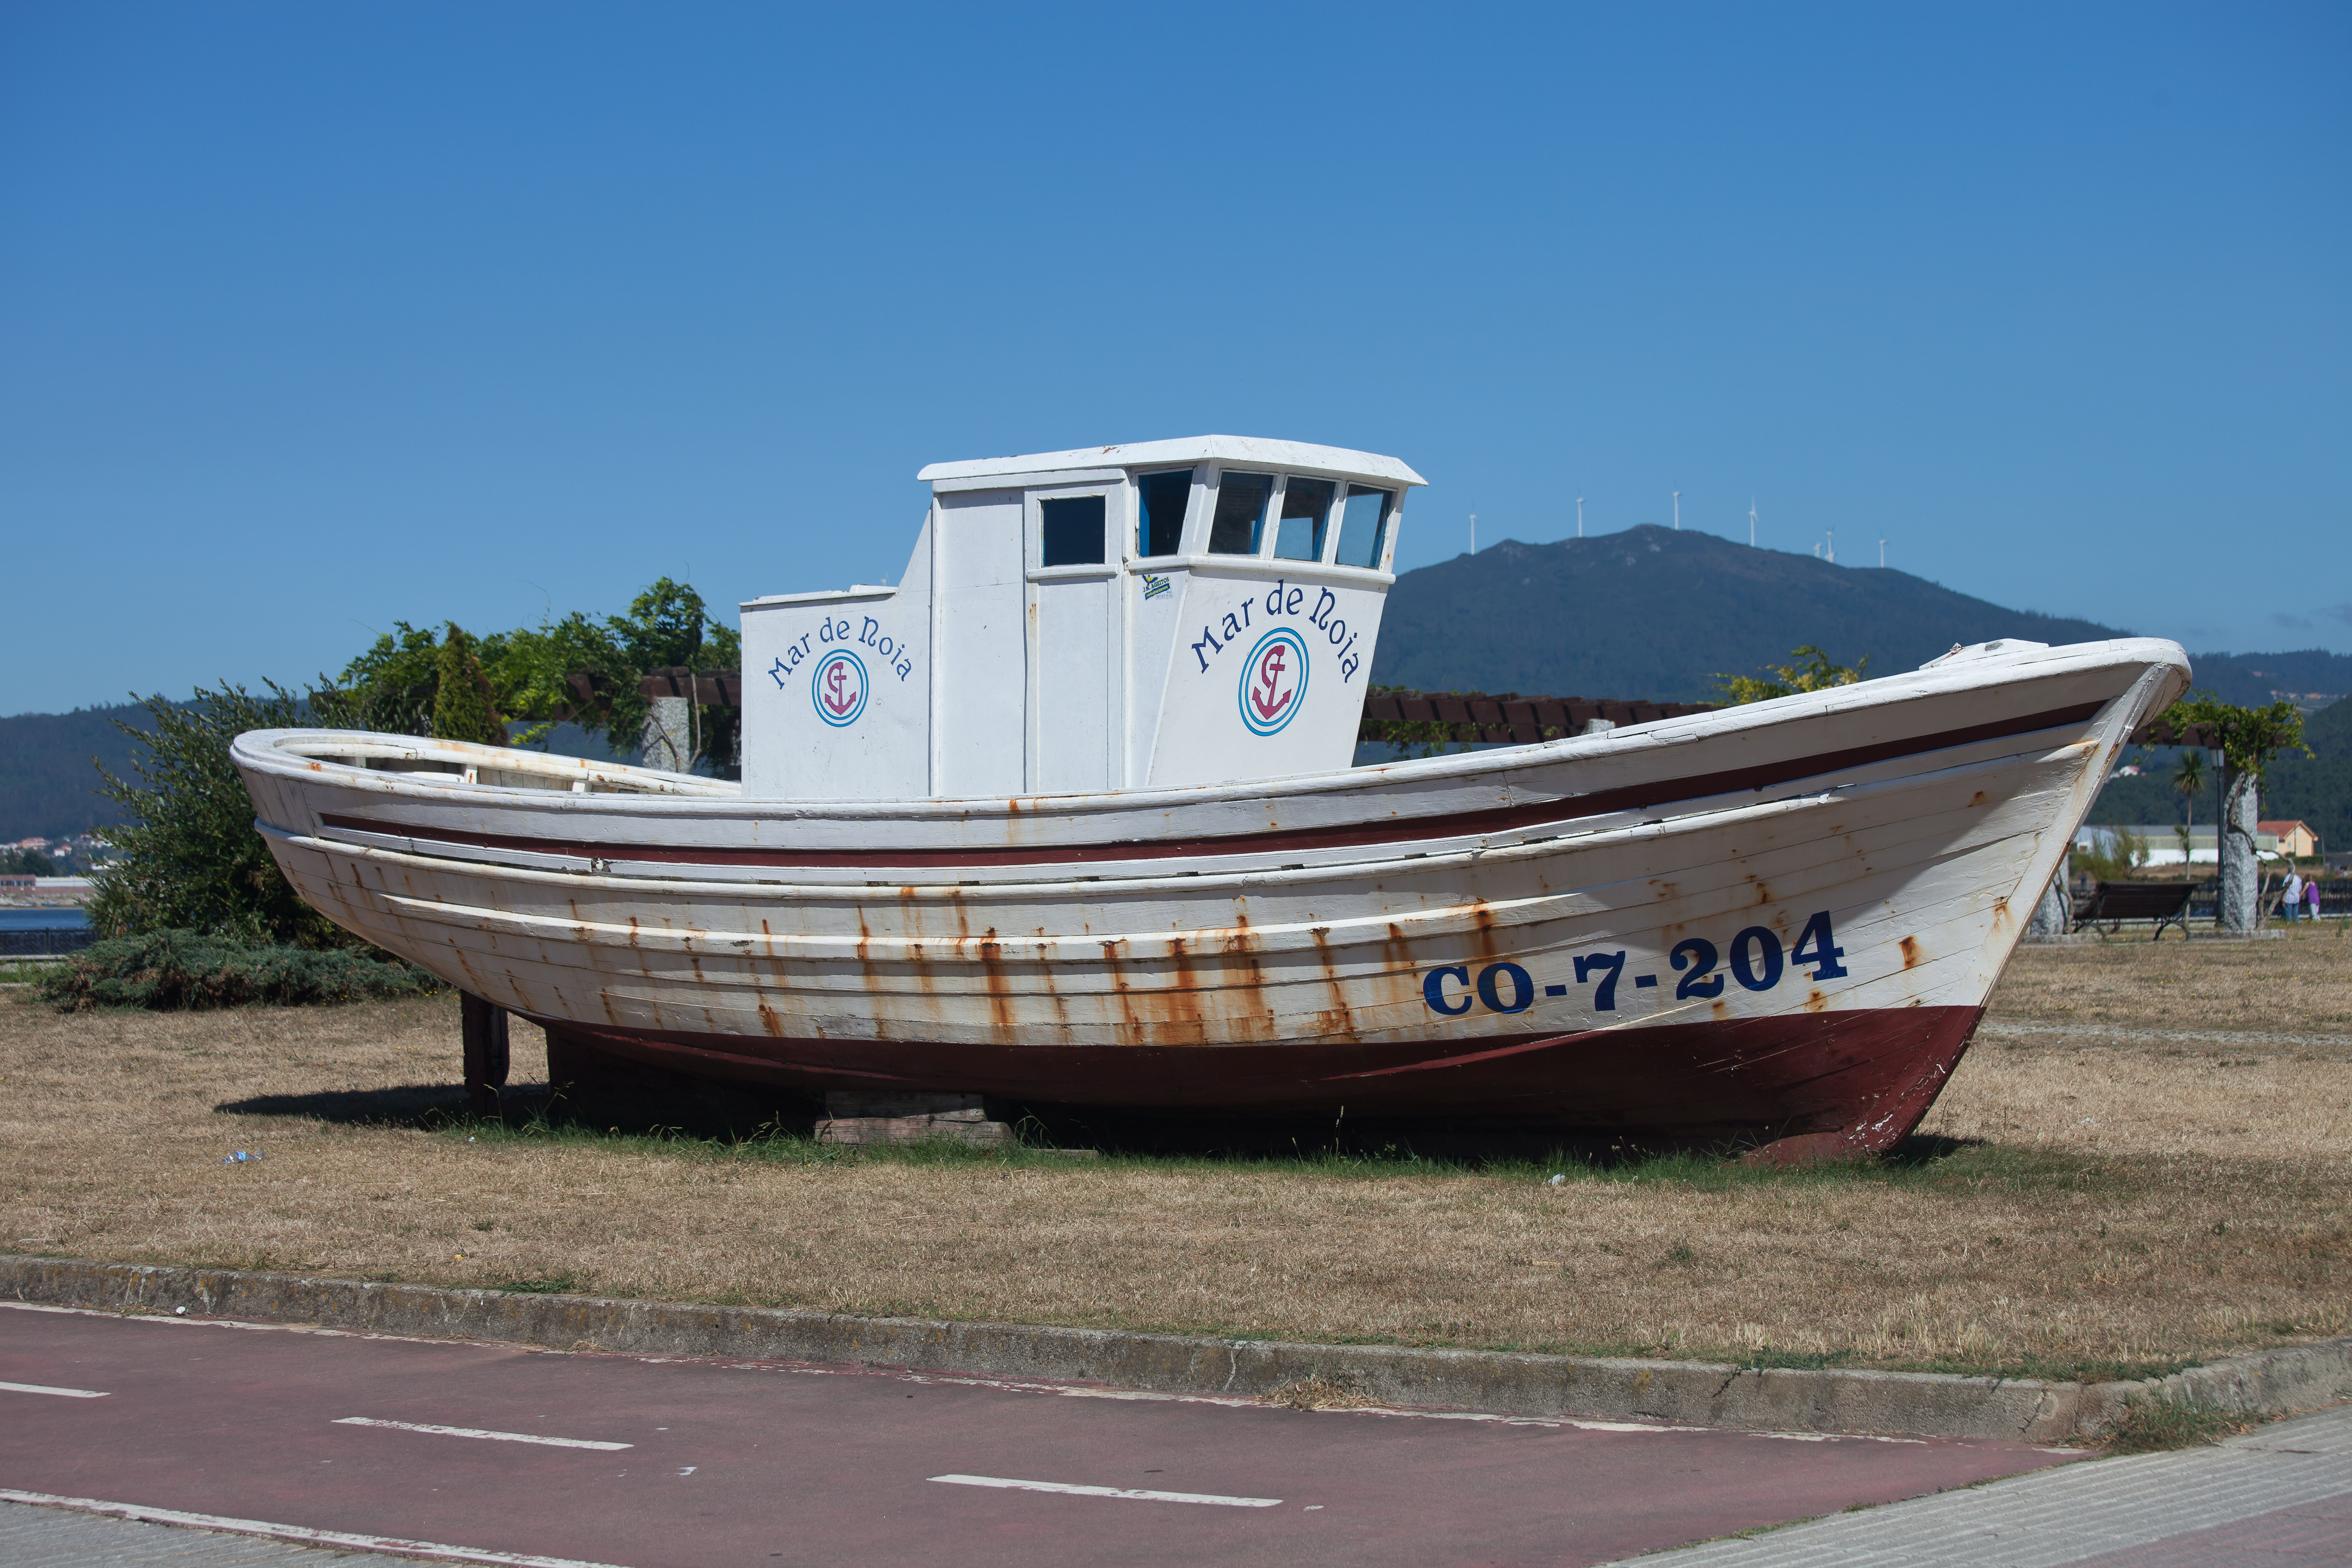 File:Barco en Noia - Galiza.jpg - Wikimedia Commons